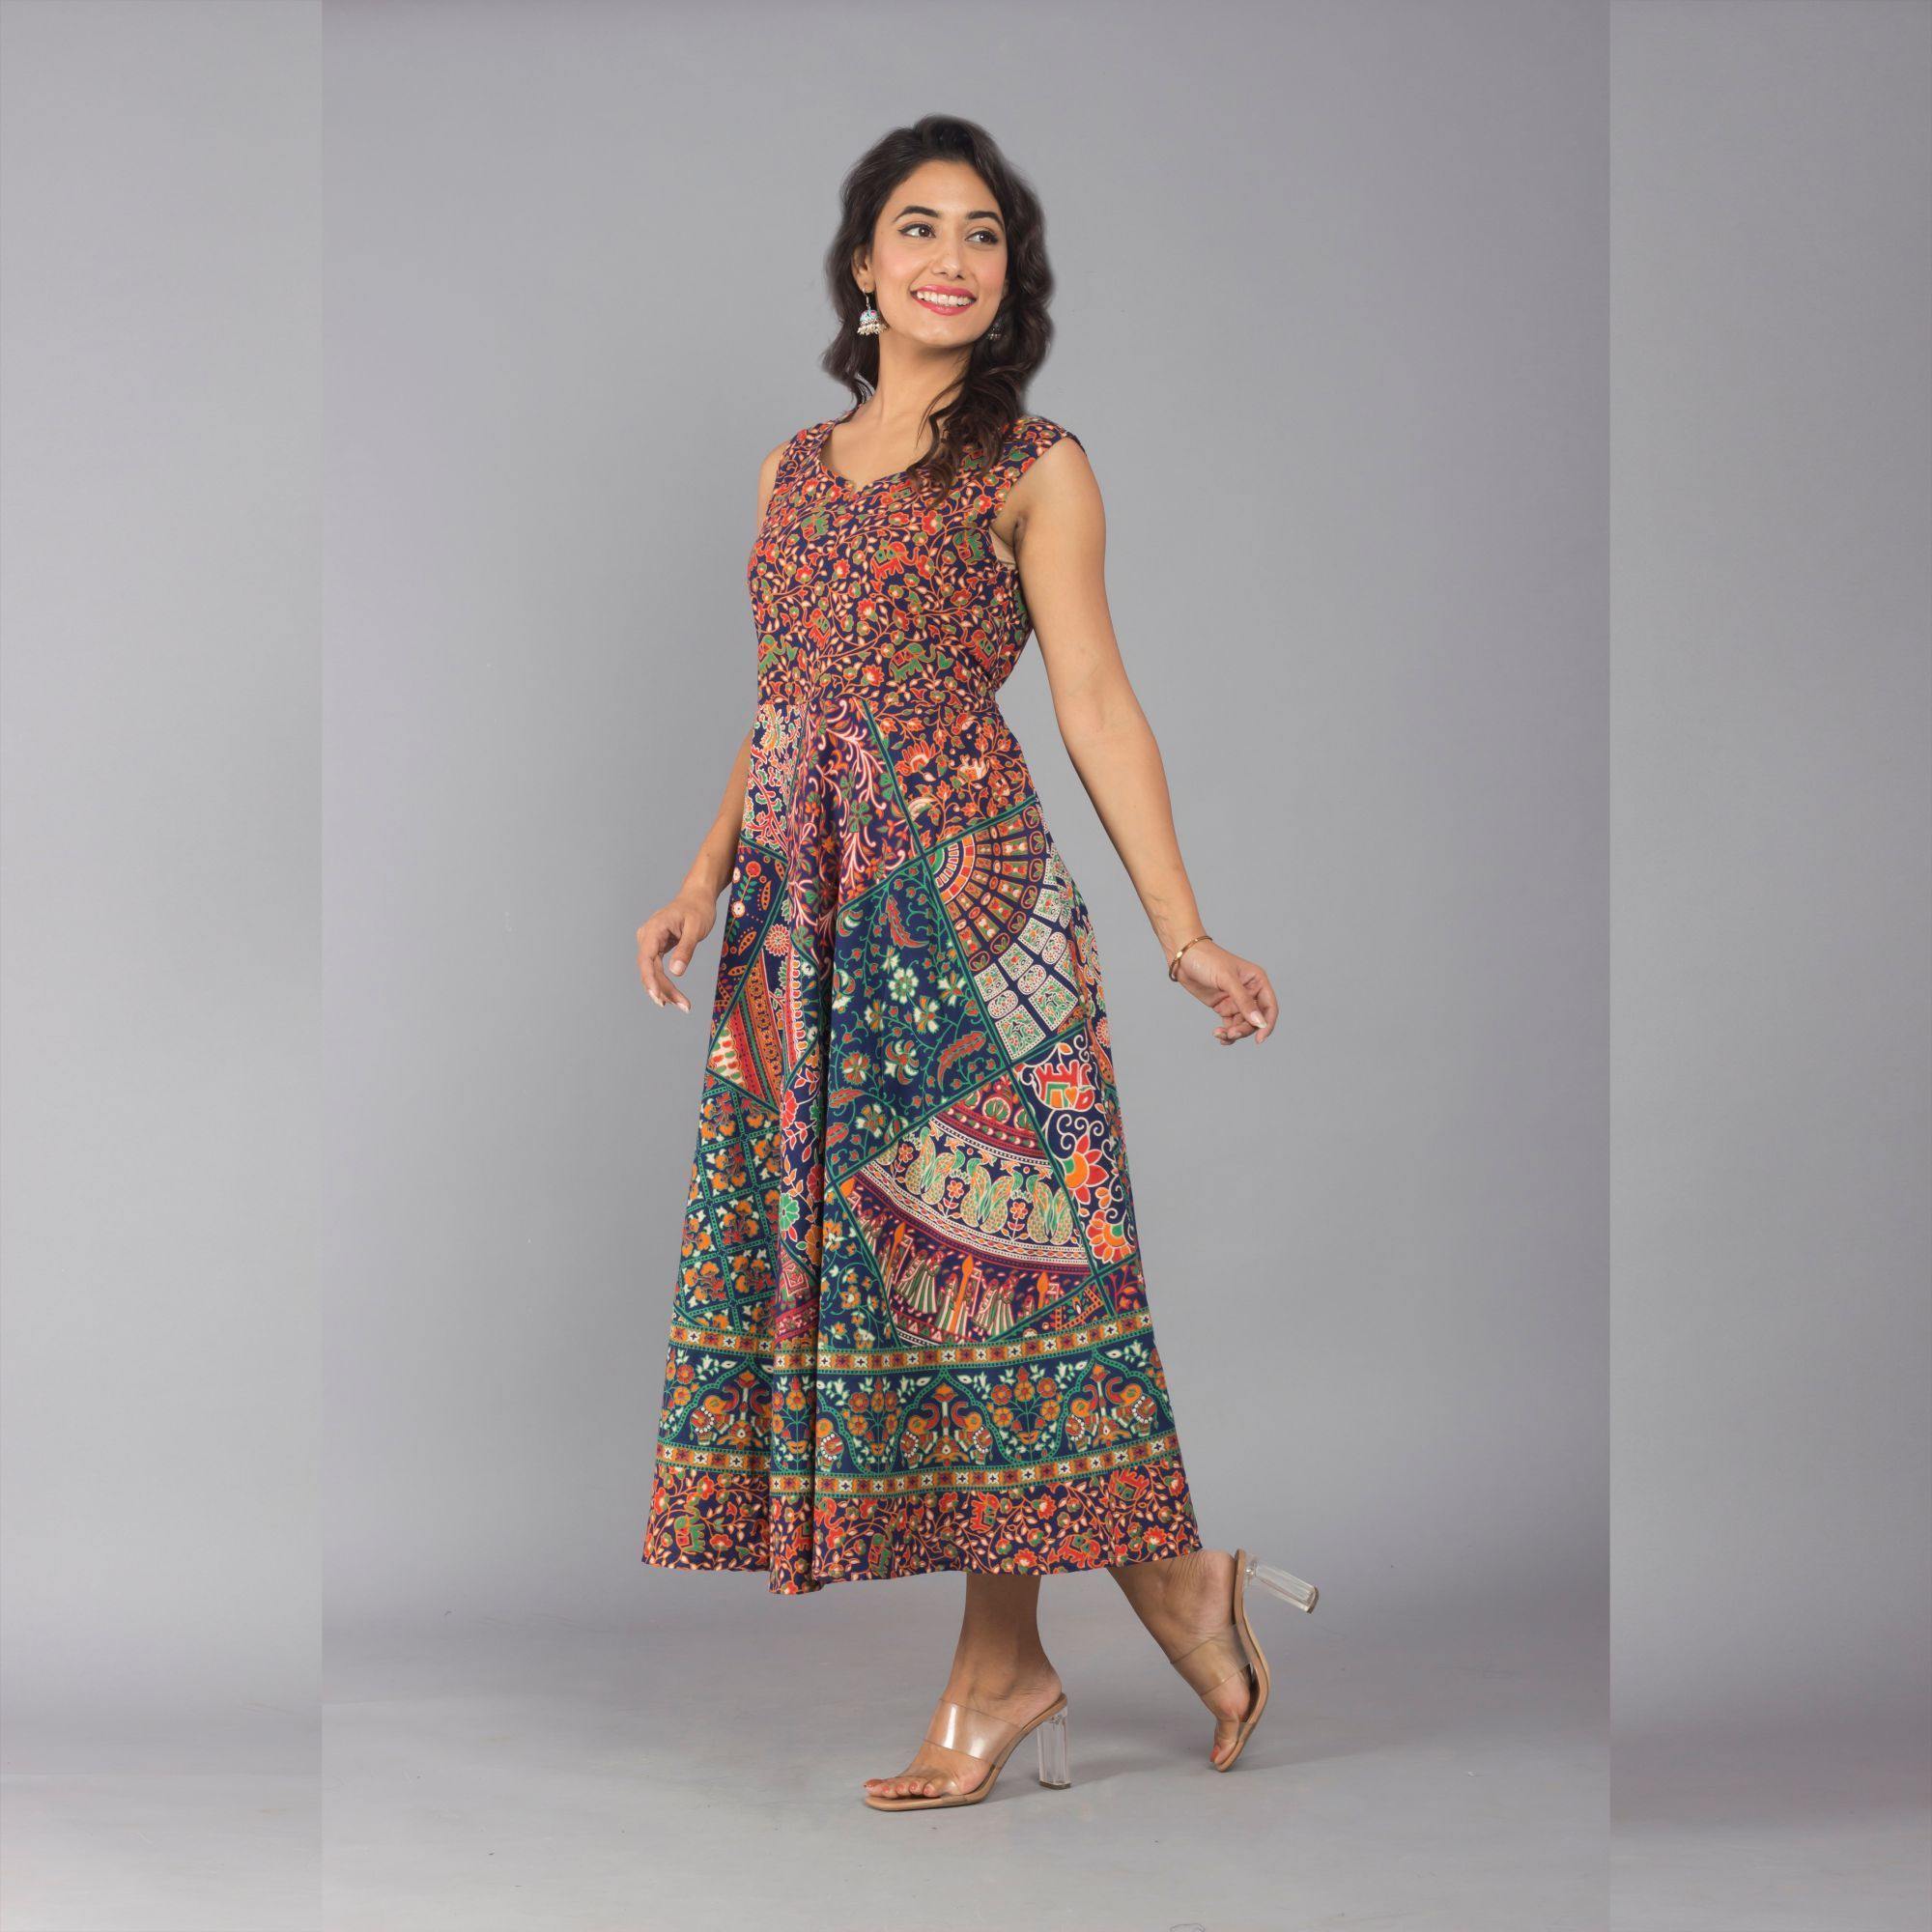 Buy ADITYA IMPEX Women's Jaipuri Printed Cotton Rajasthani Traditional Maxi  Long Dress (Free Size Upto 44-XXL), Brown Multi at Amazon.in